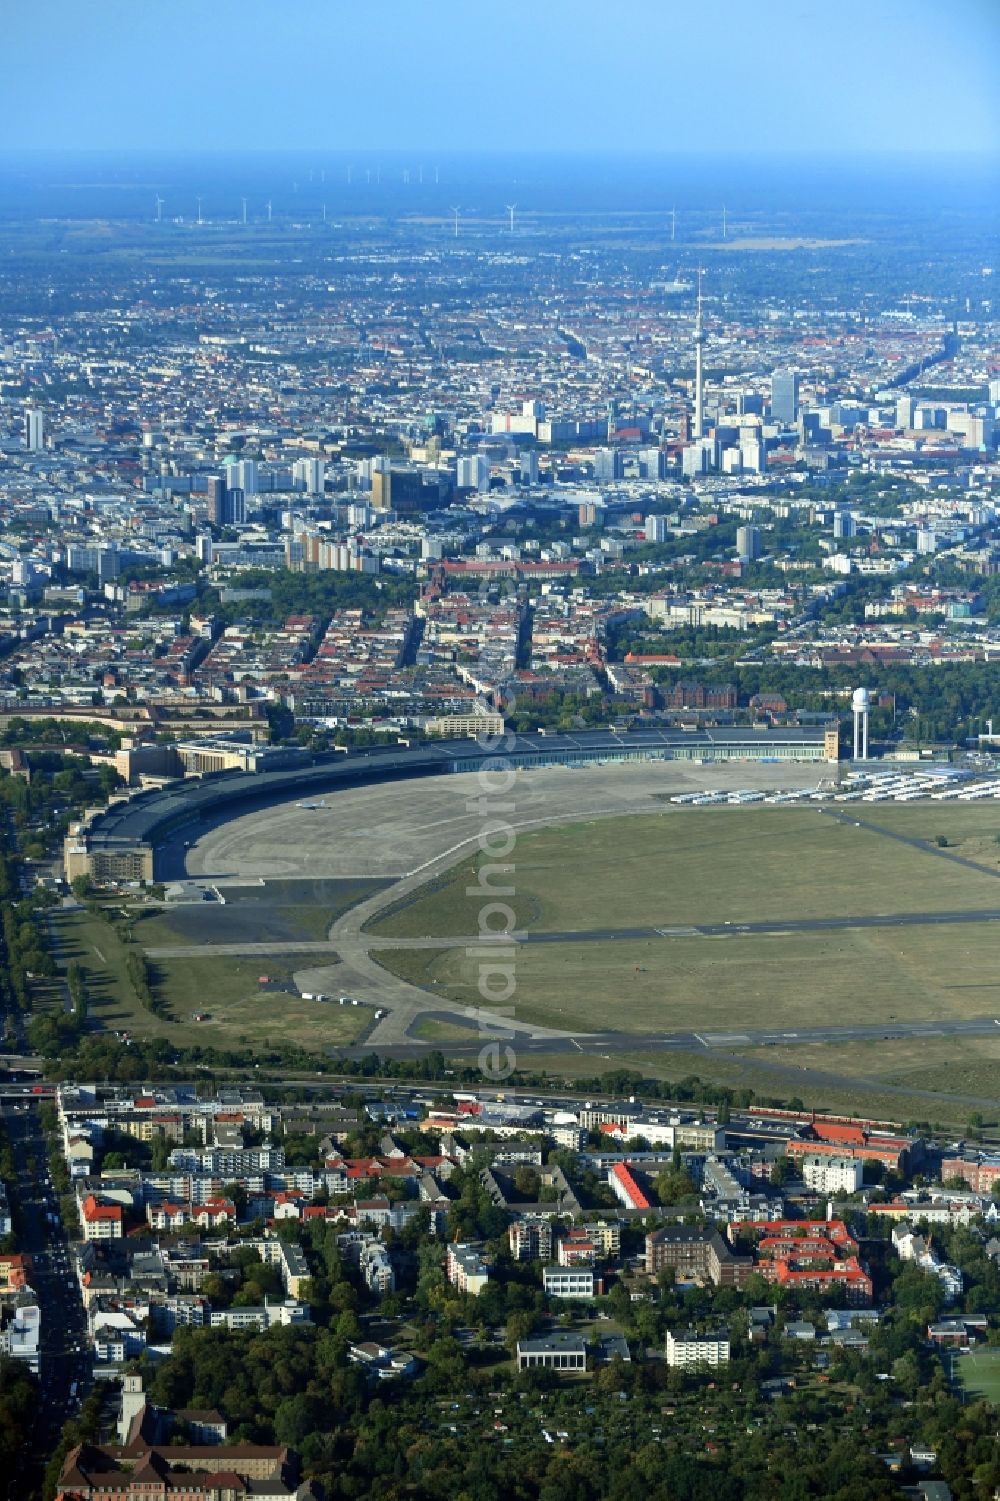 Berlin from above - Premises of the former airport Berlin-Tempelhof Tempelhofer Freiheit in the Tempelhof part of Berlin, Germany